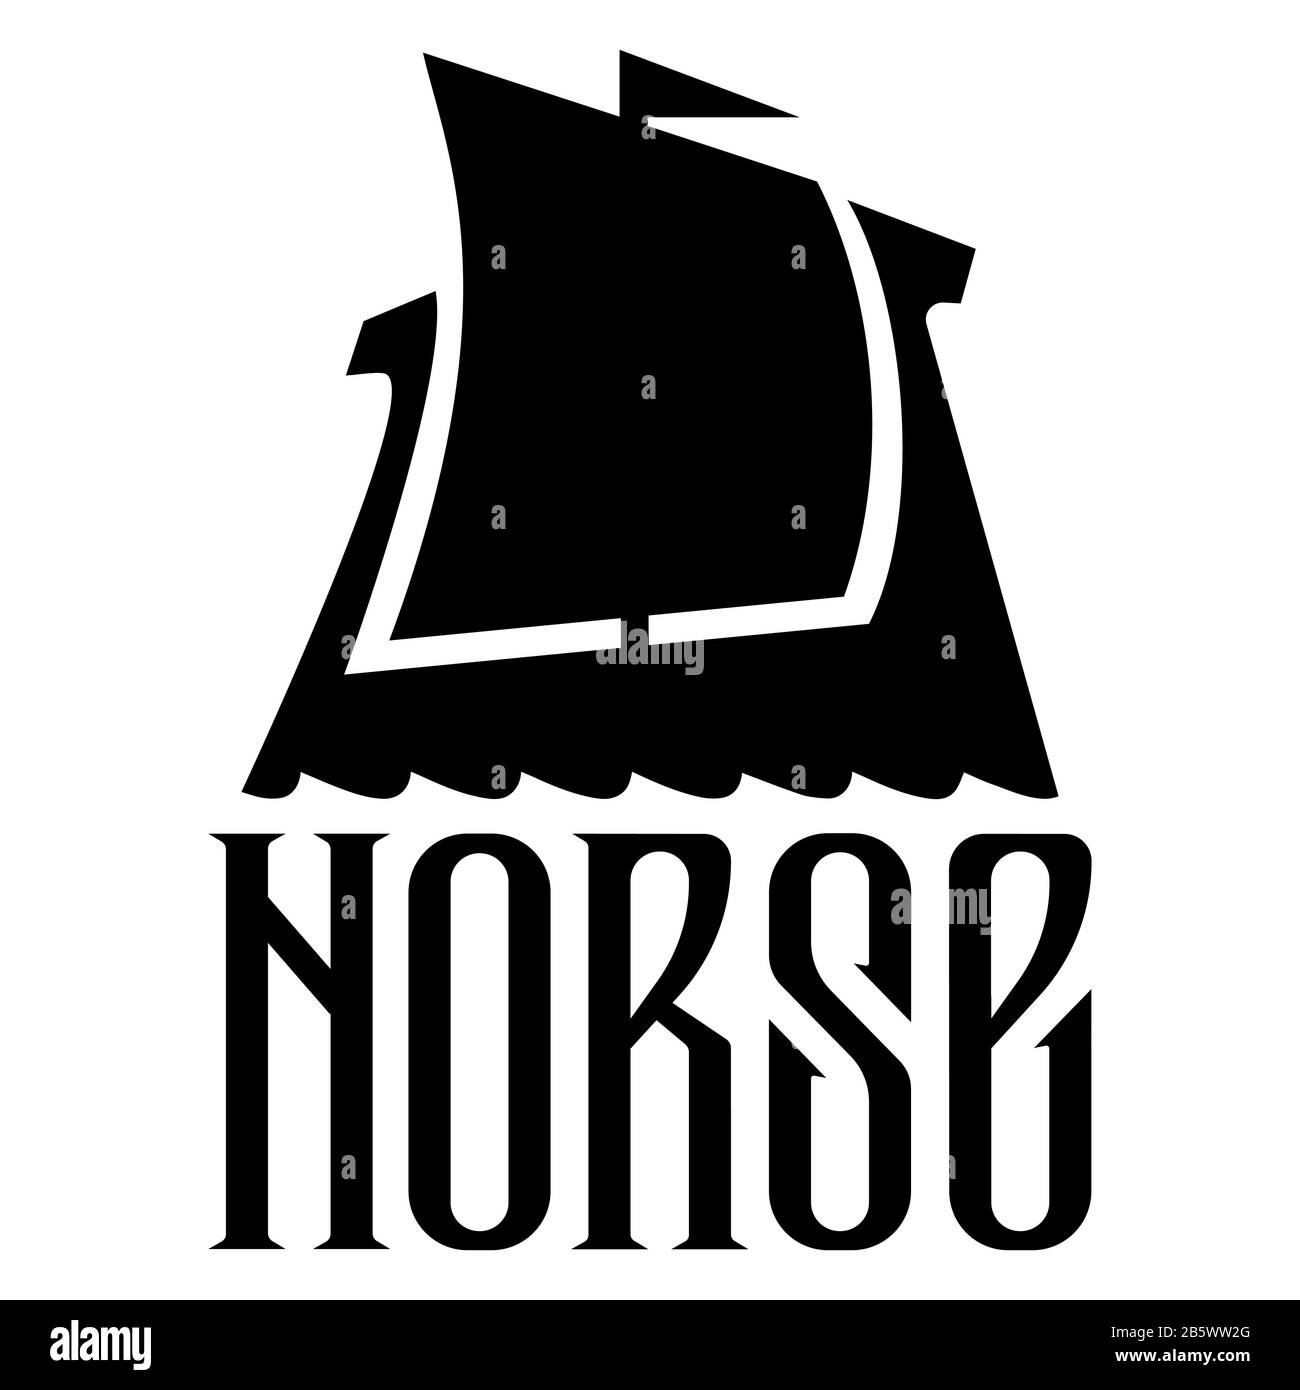 Warship of the Vikings. Drakkar logo, ancient scandinavian pattern and norse sign Valknut Stock Vector